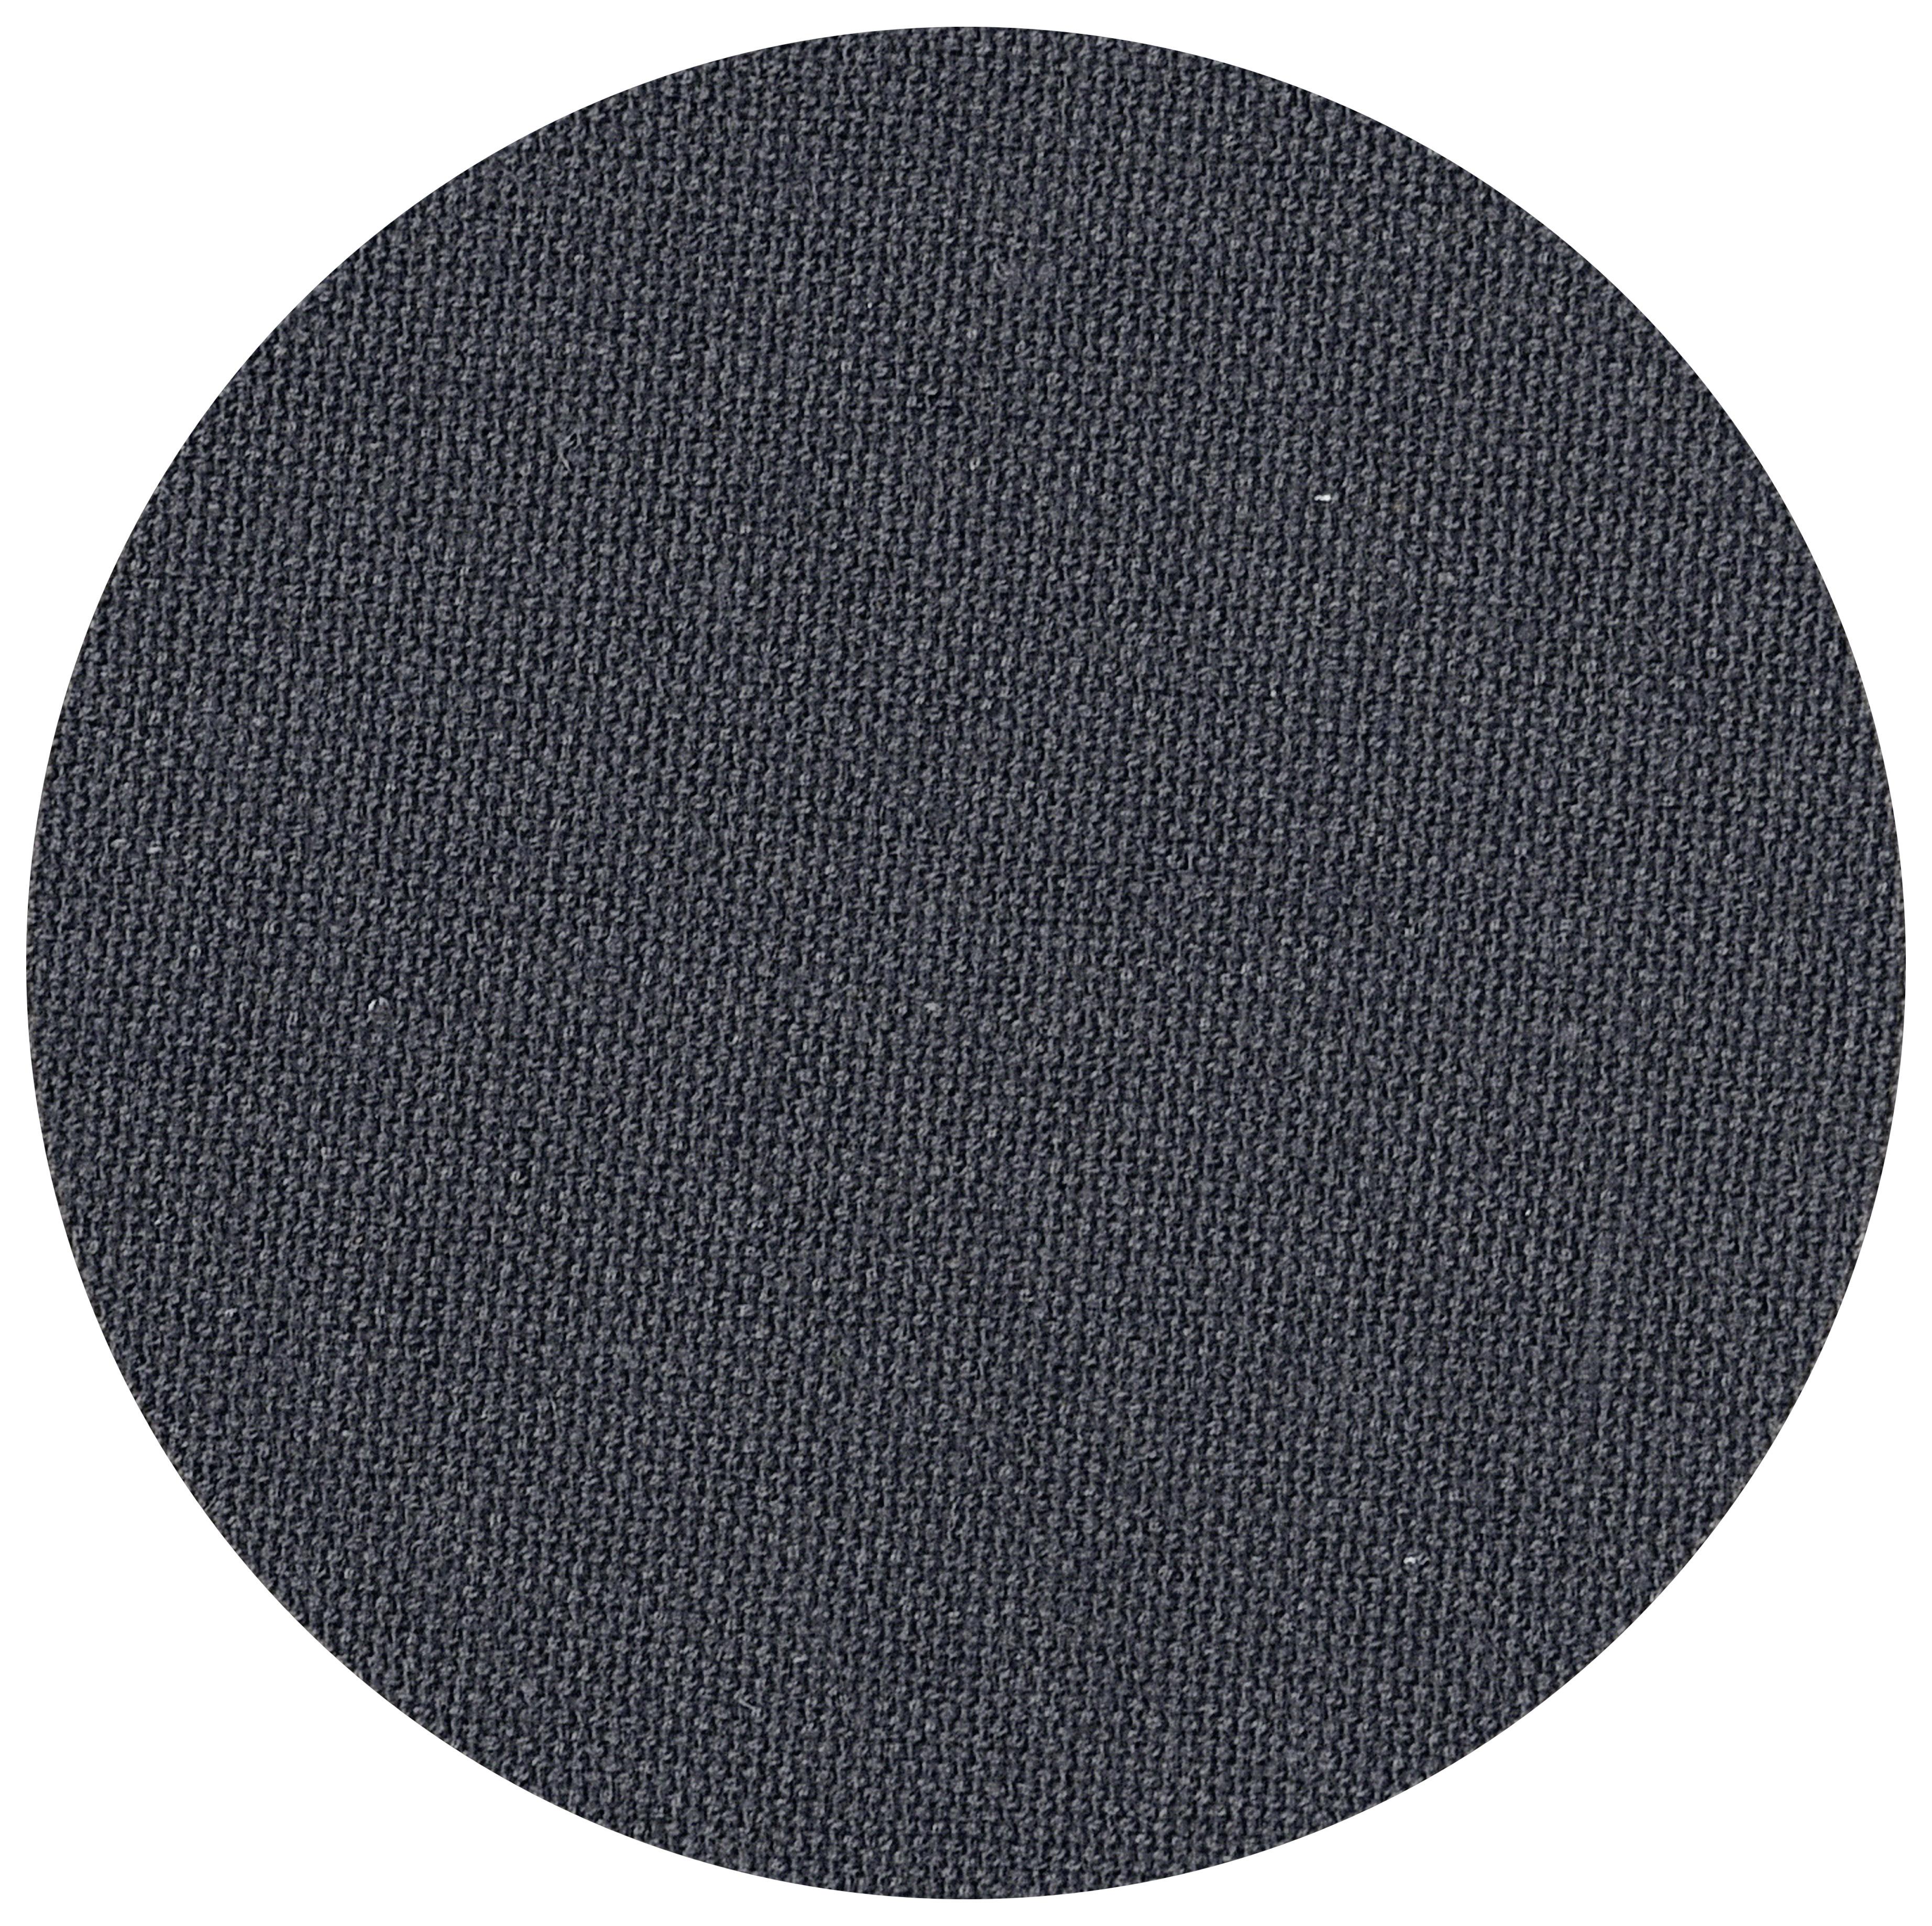 Fertigvorhang GRETA aus Baumwolle in Silber/Grau Material